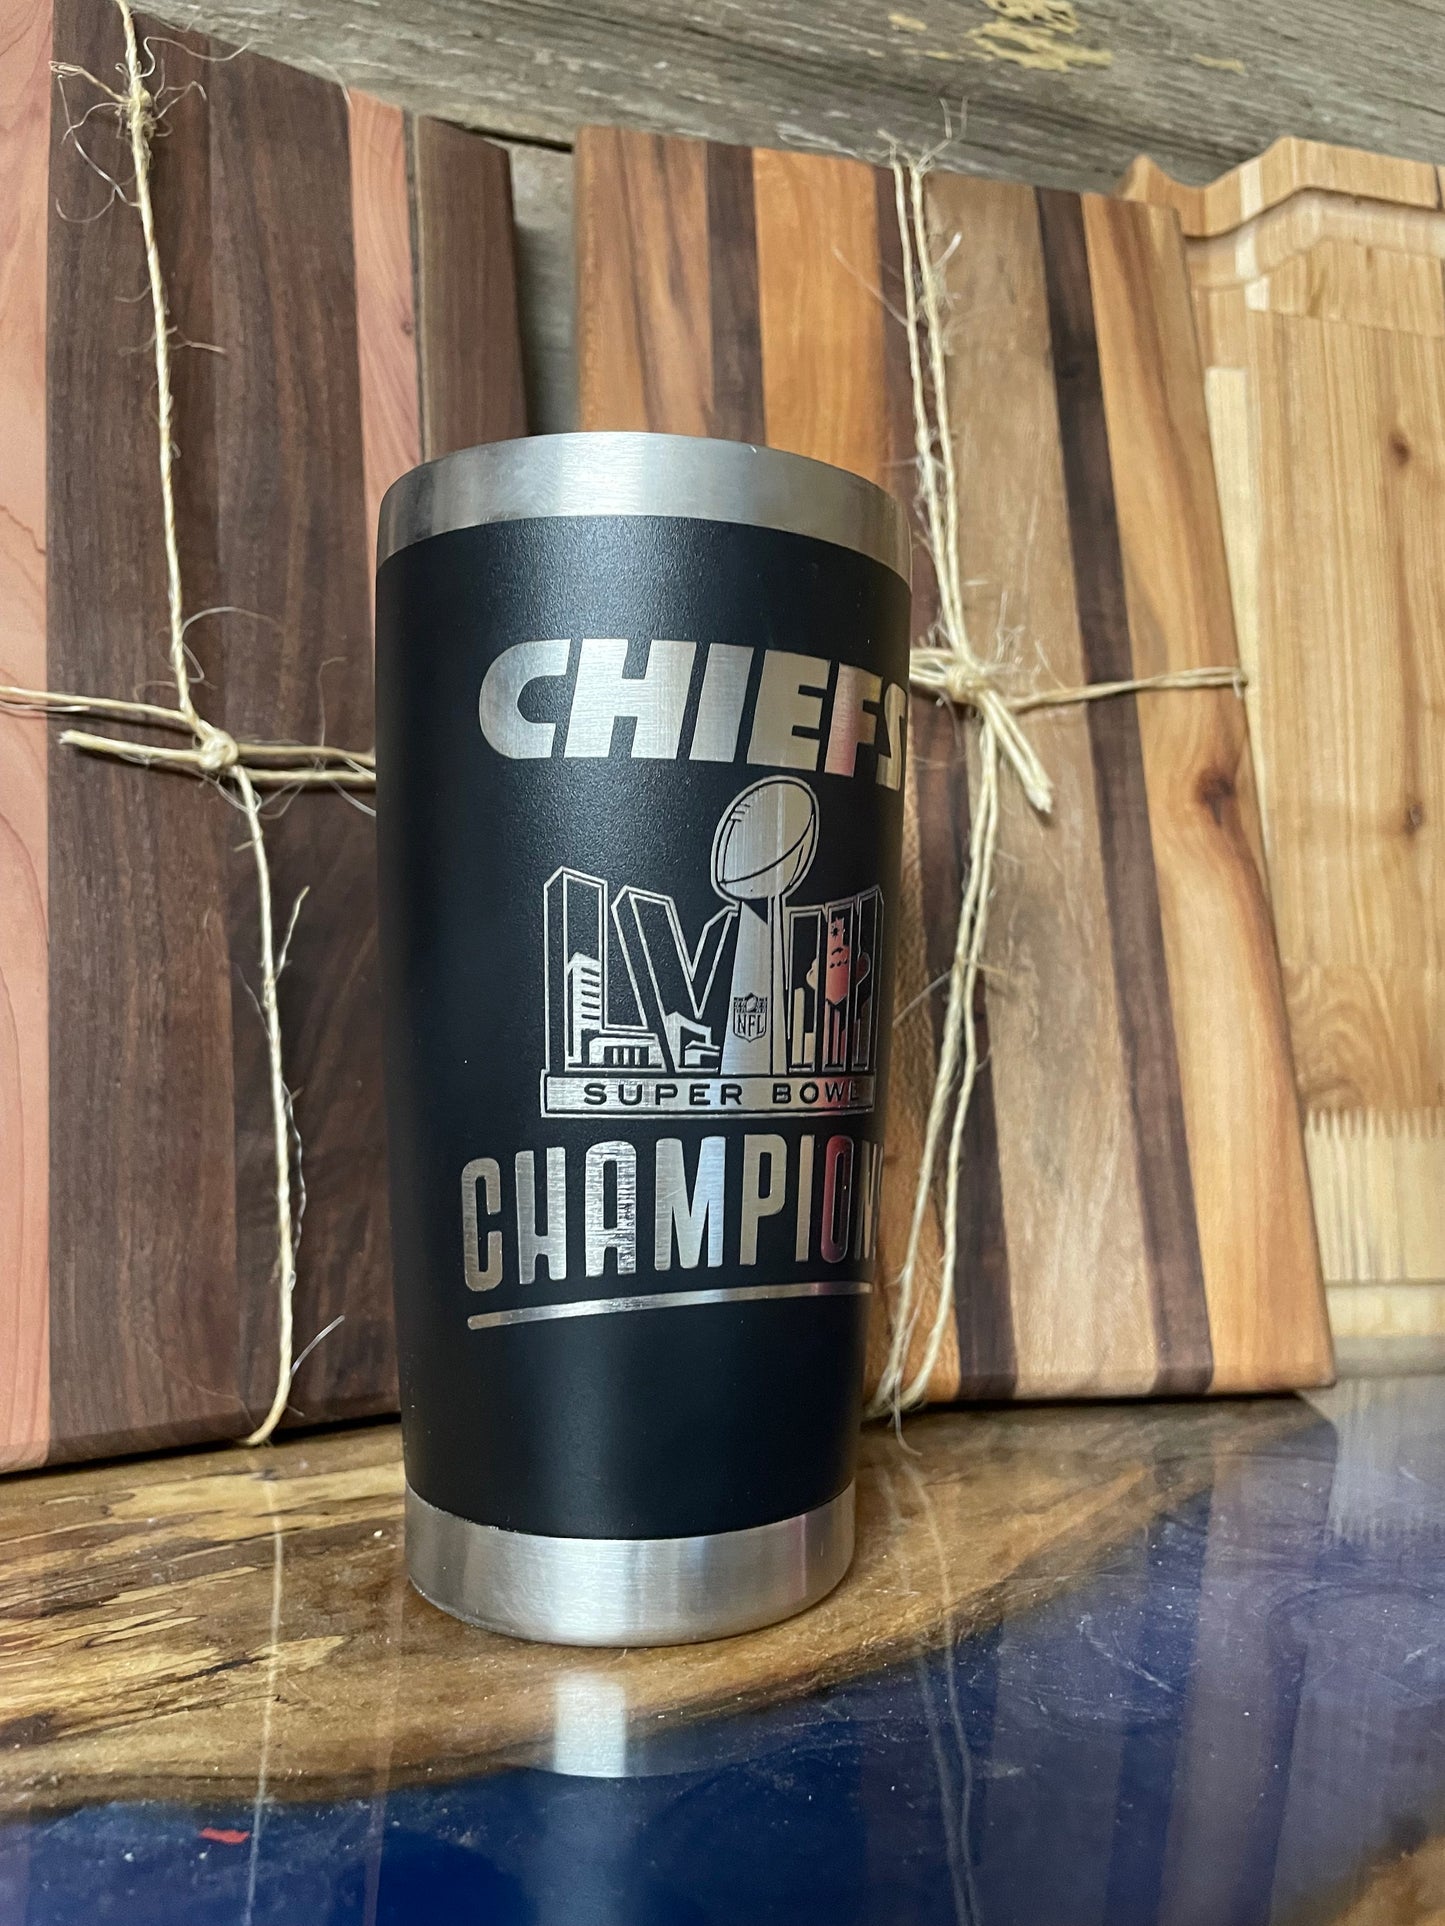 Chiefs Super Bowl Champions  20 oz tumbler